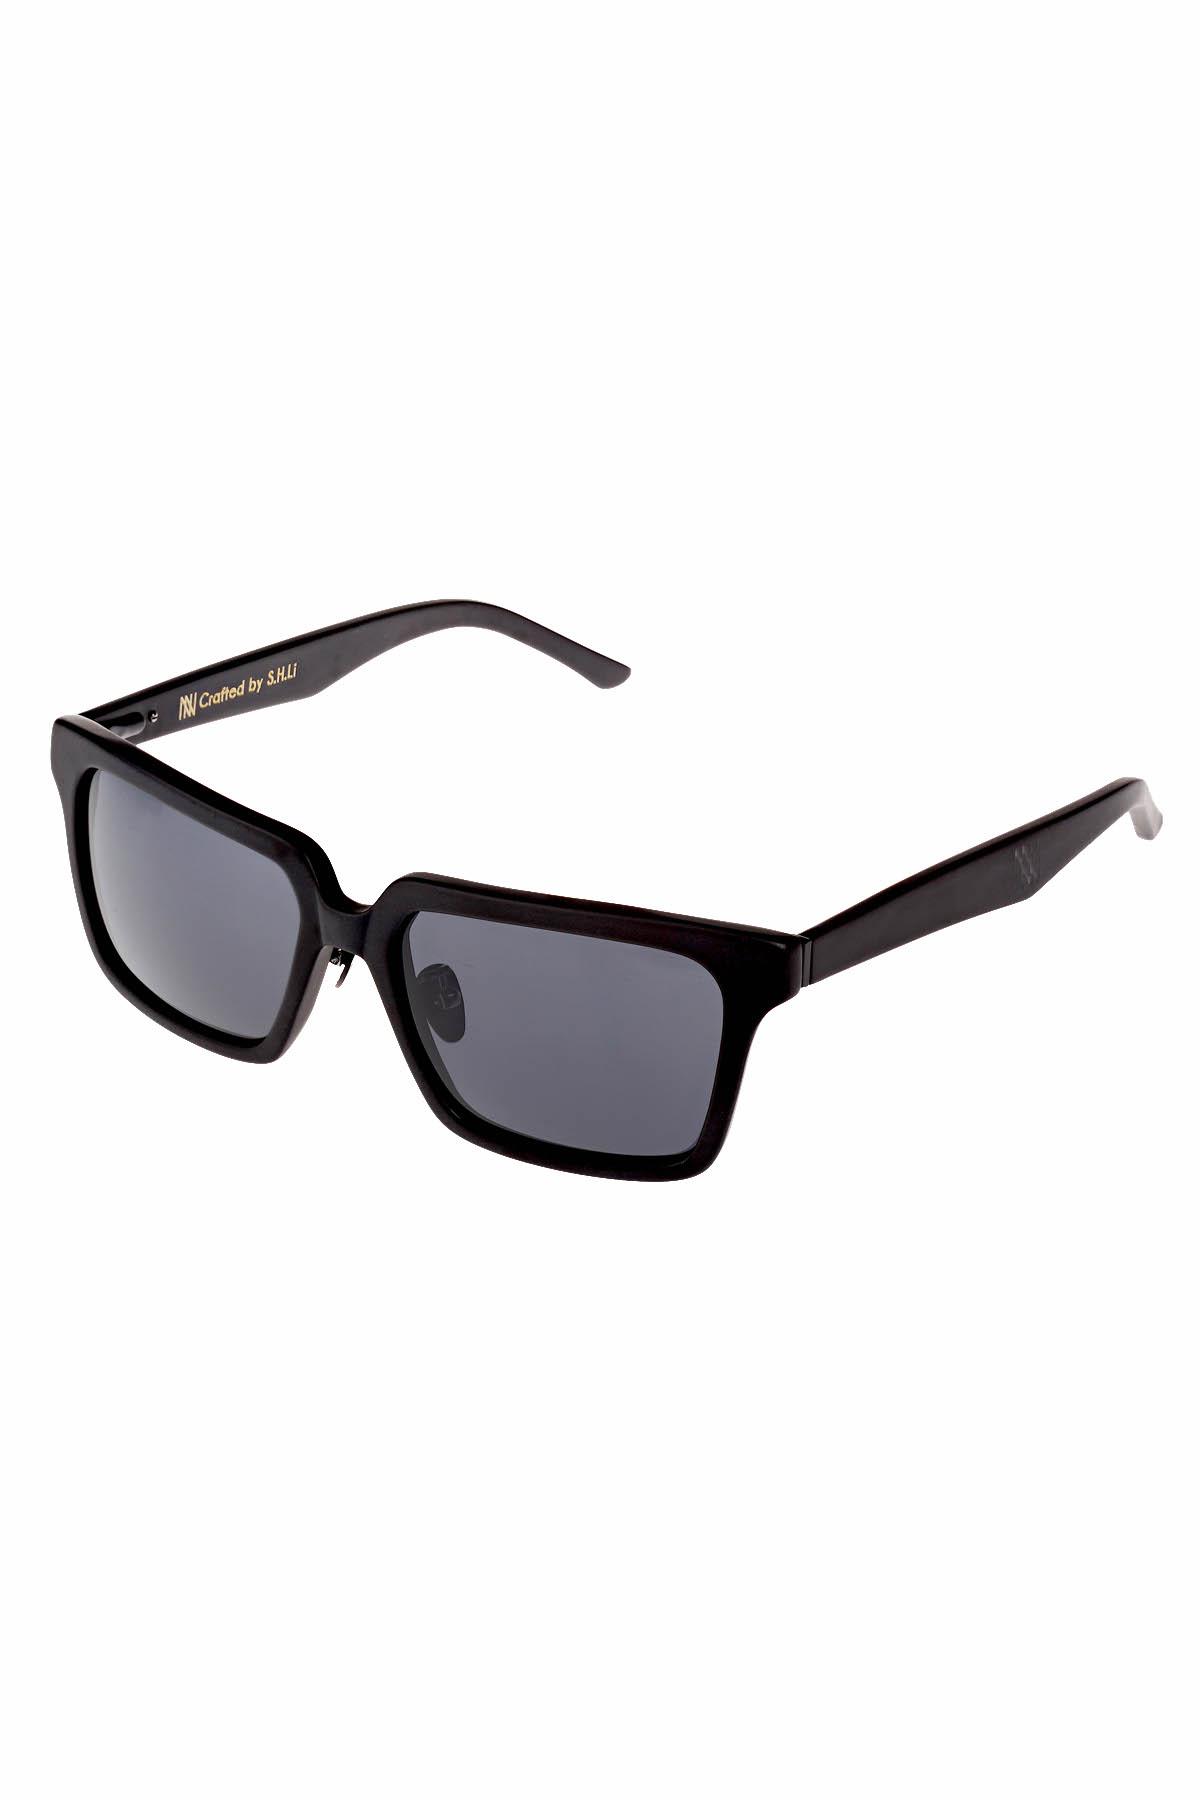 Neo-Ne Matte-Black Morrissey Sunglasses